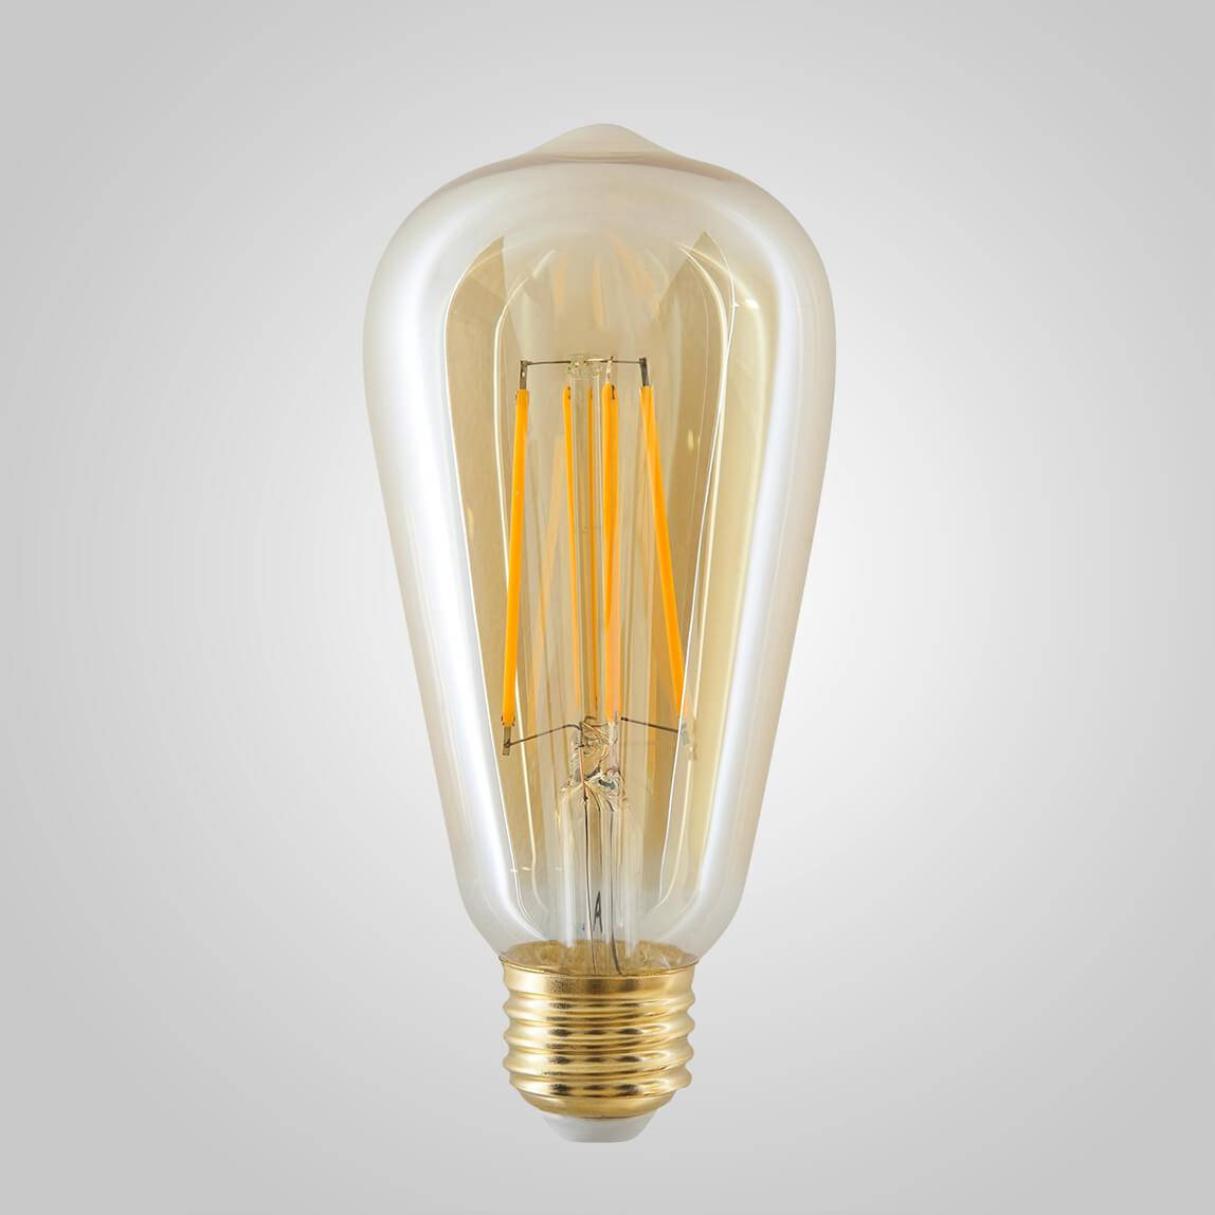 How To Change An LED Light Bulb